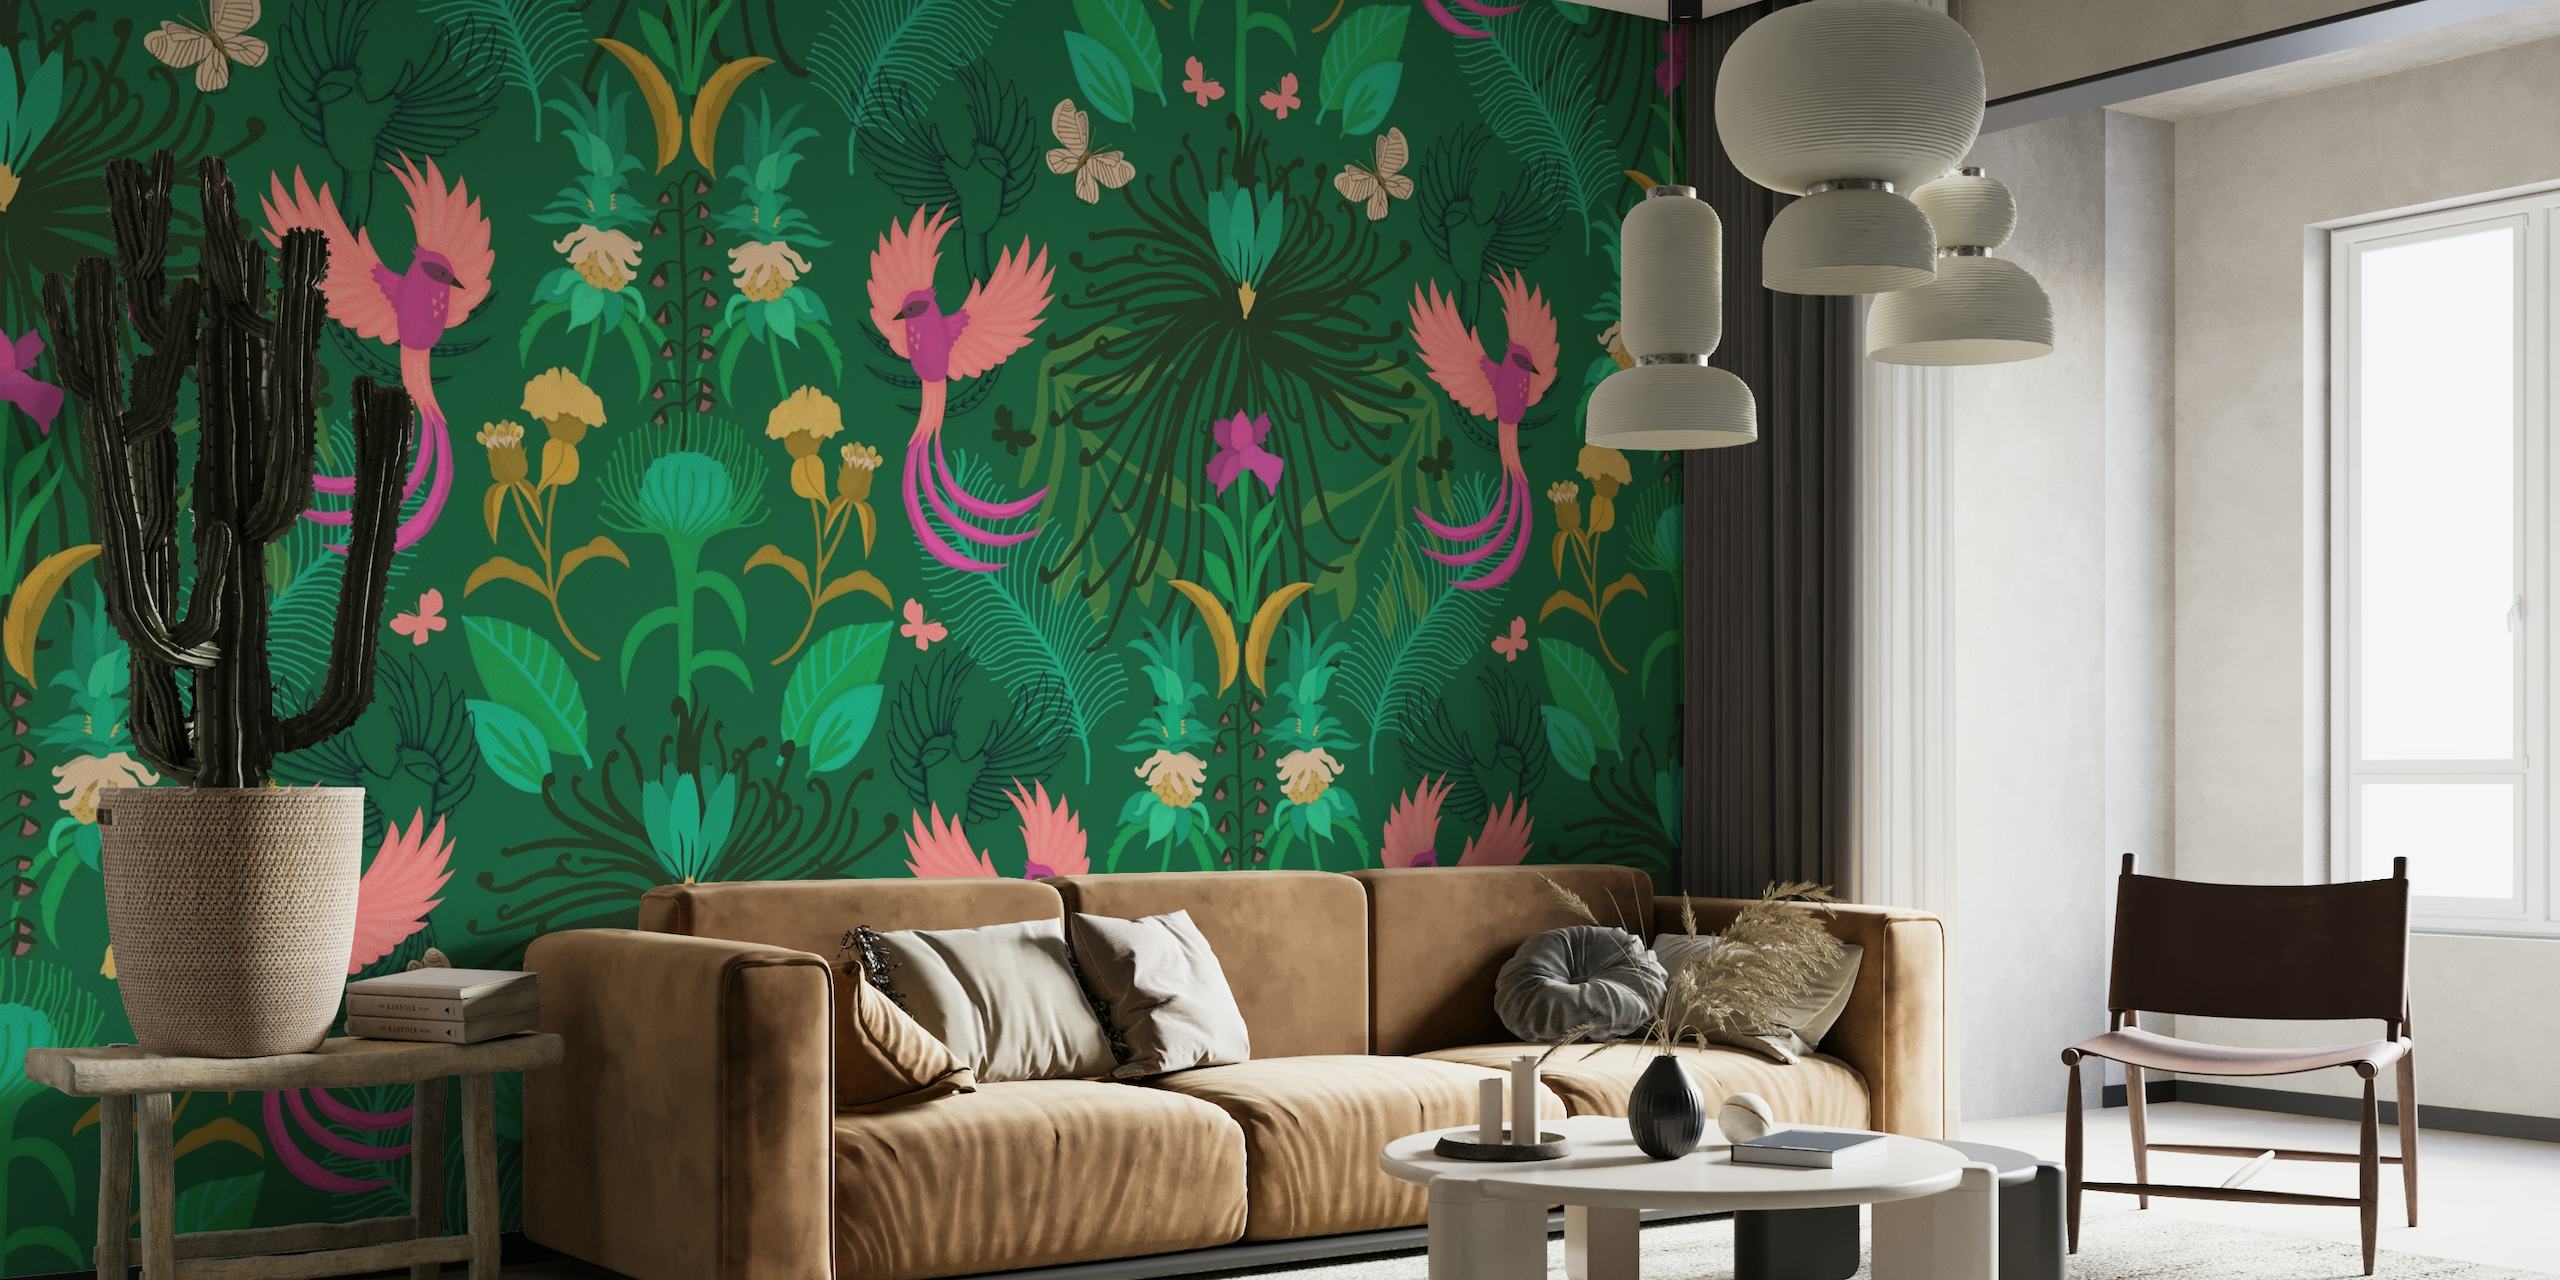 Colorido mural de un jardín secreto con vibrantes aves exóticas y exuberante vegetación